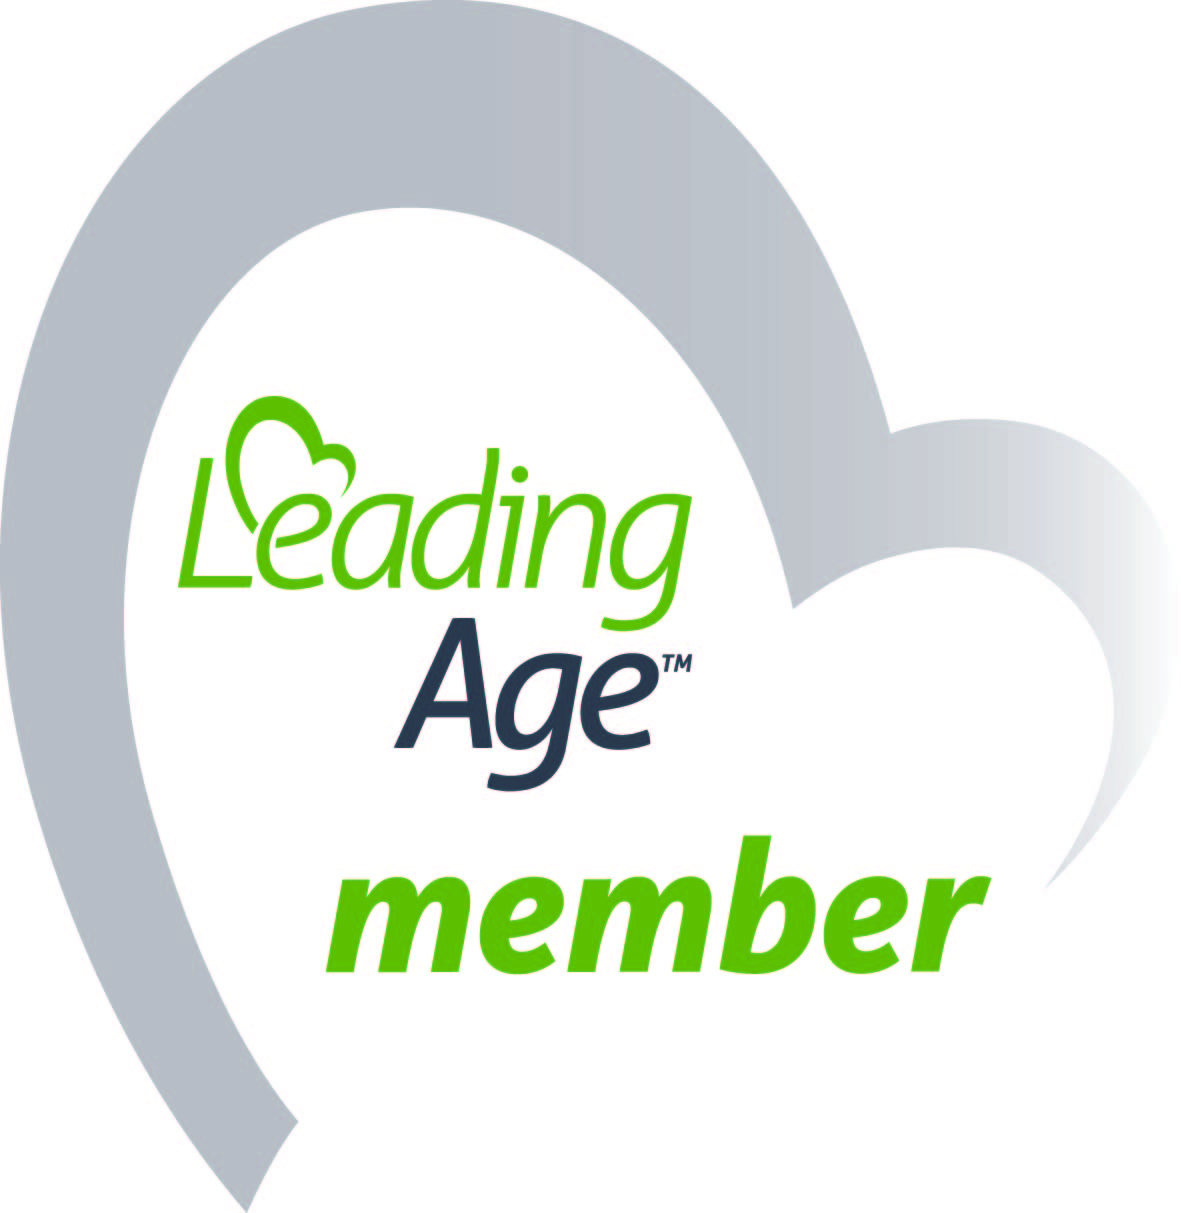 Leading Age Member logo